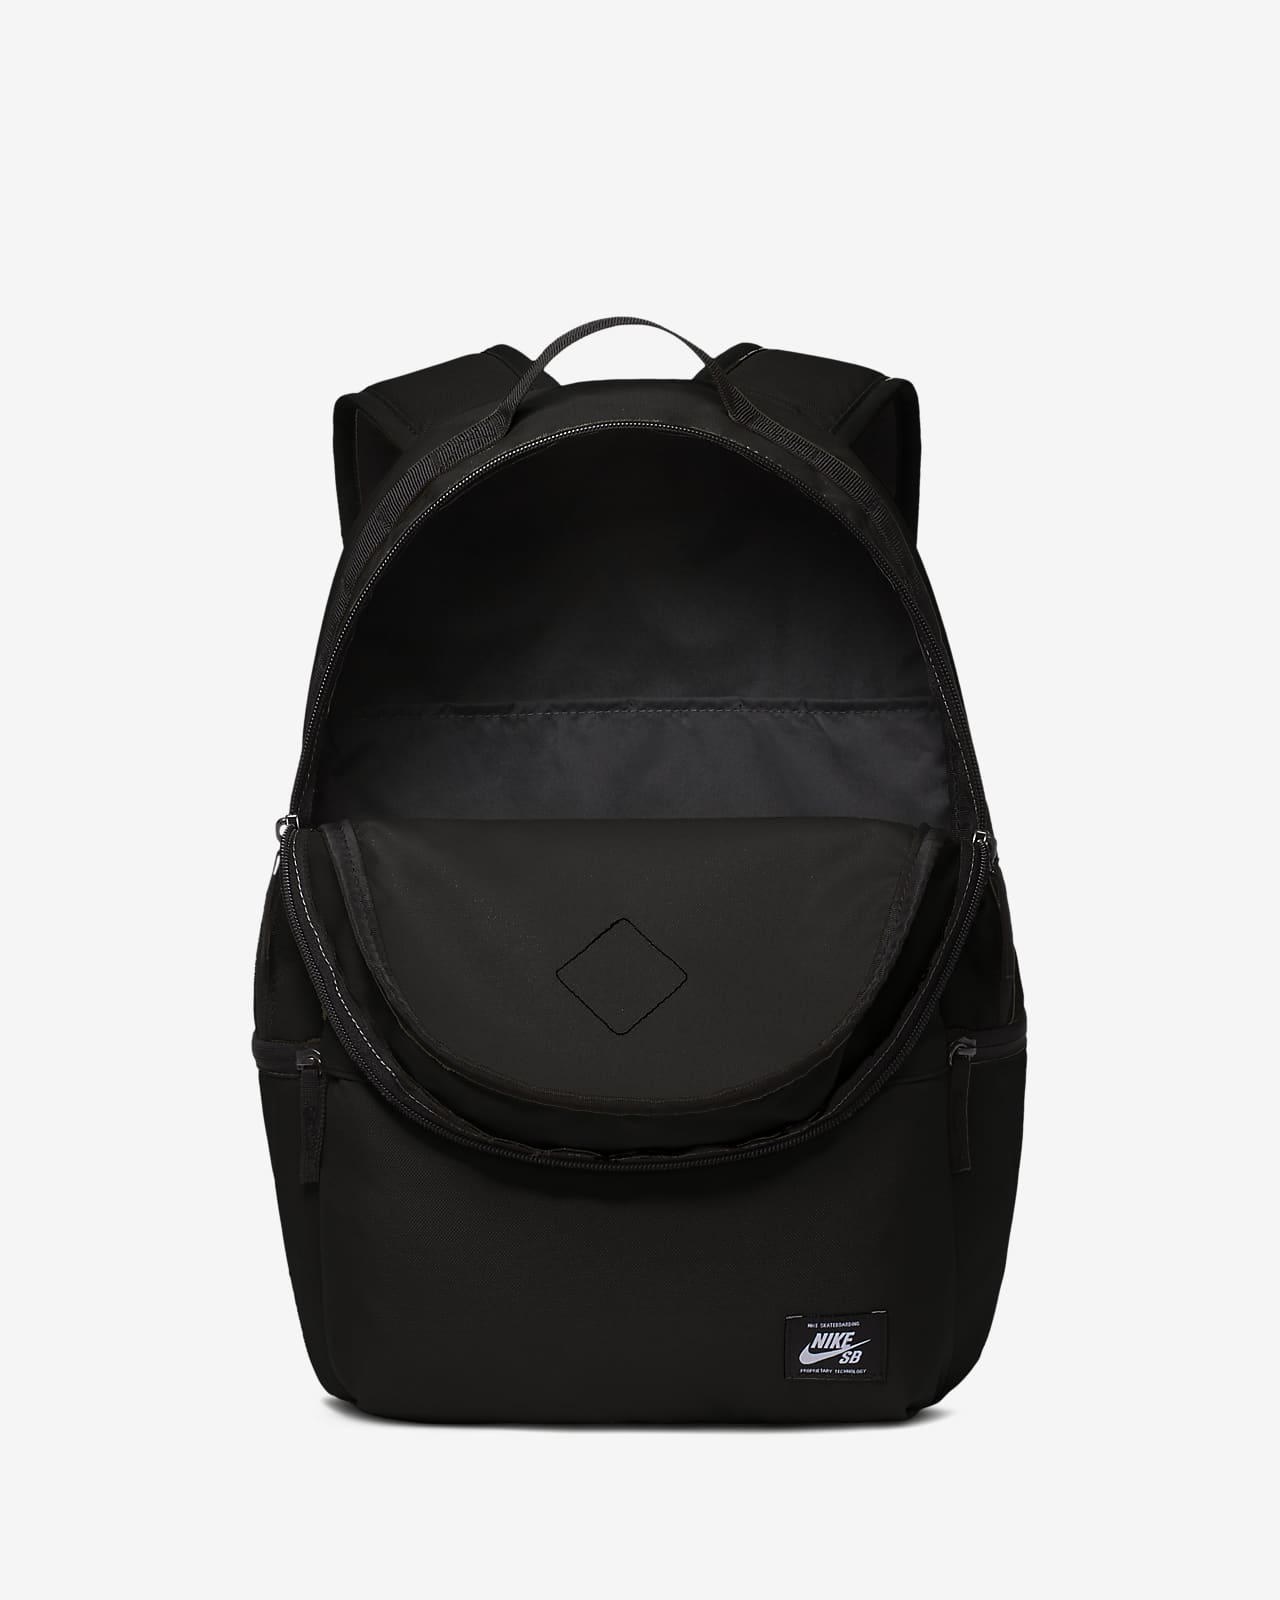 nike sb backpack for sale